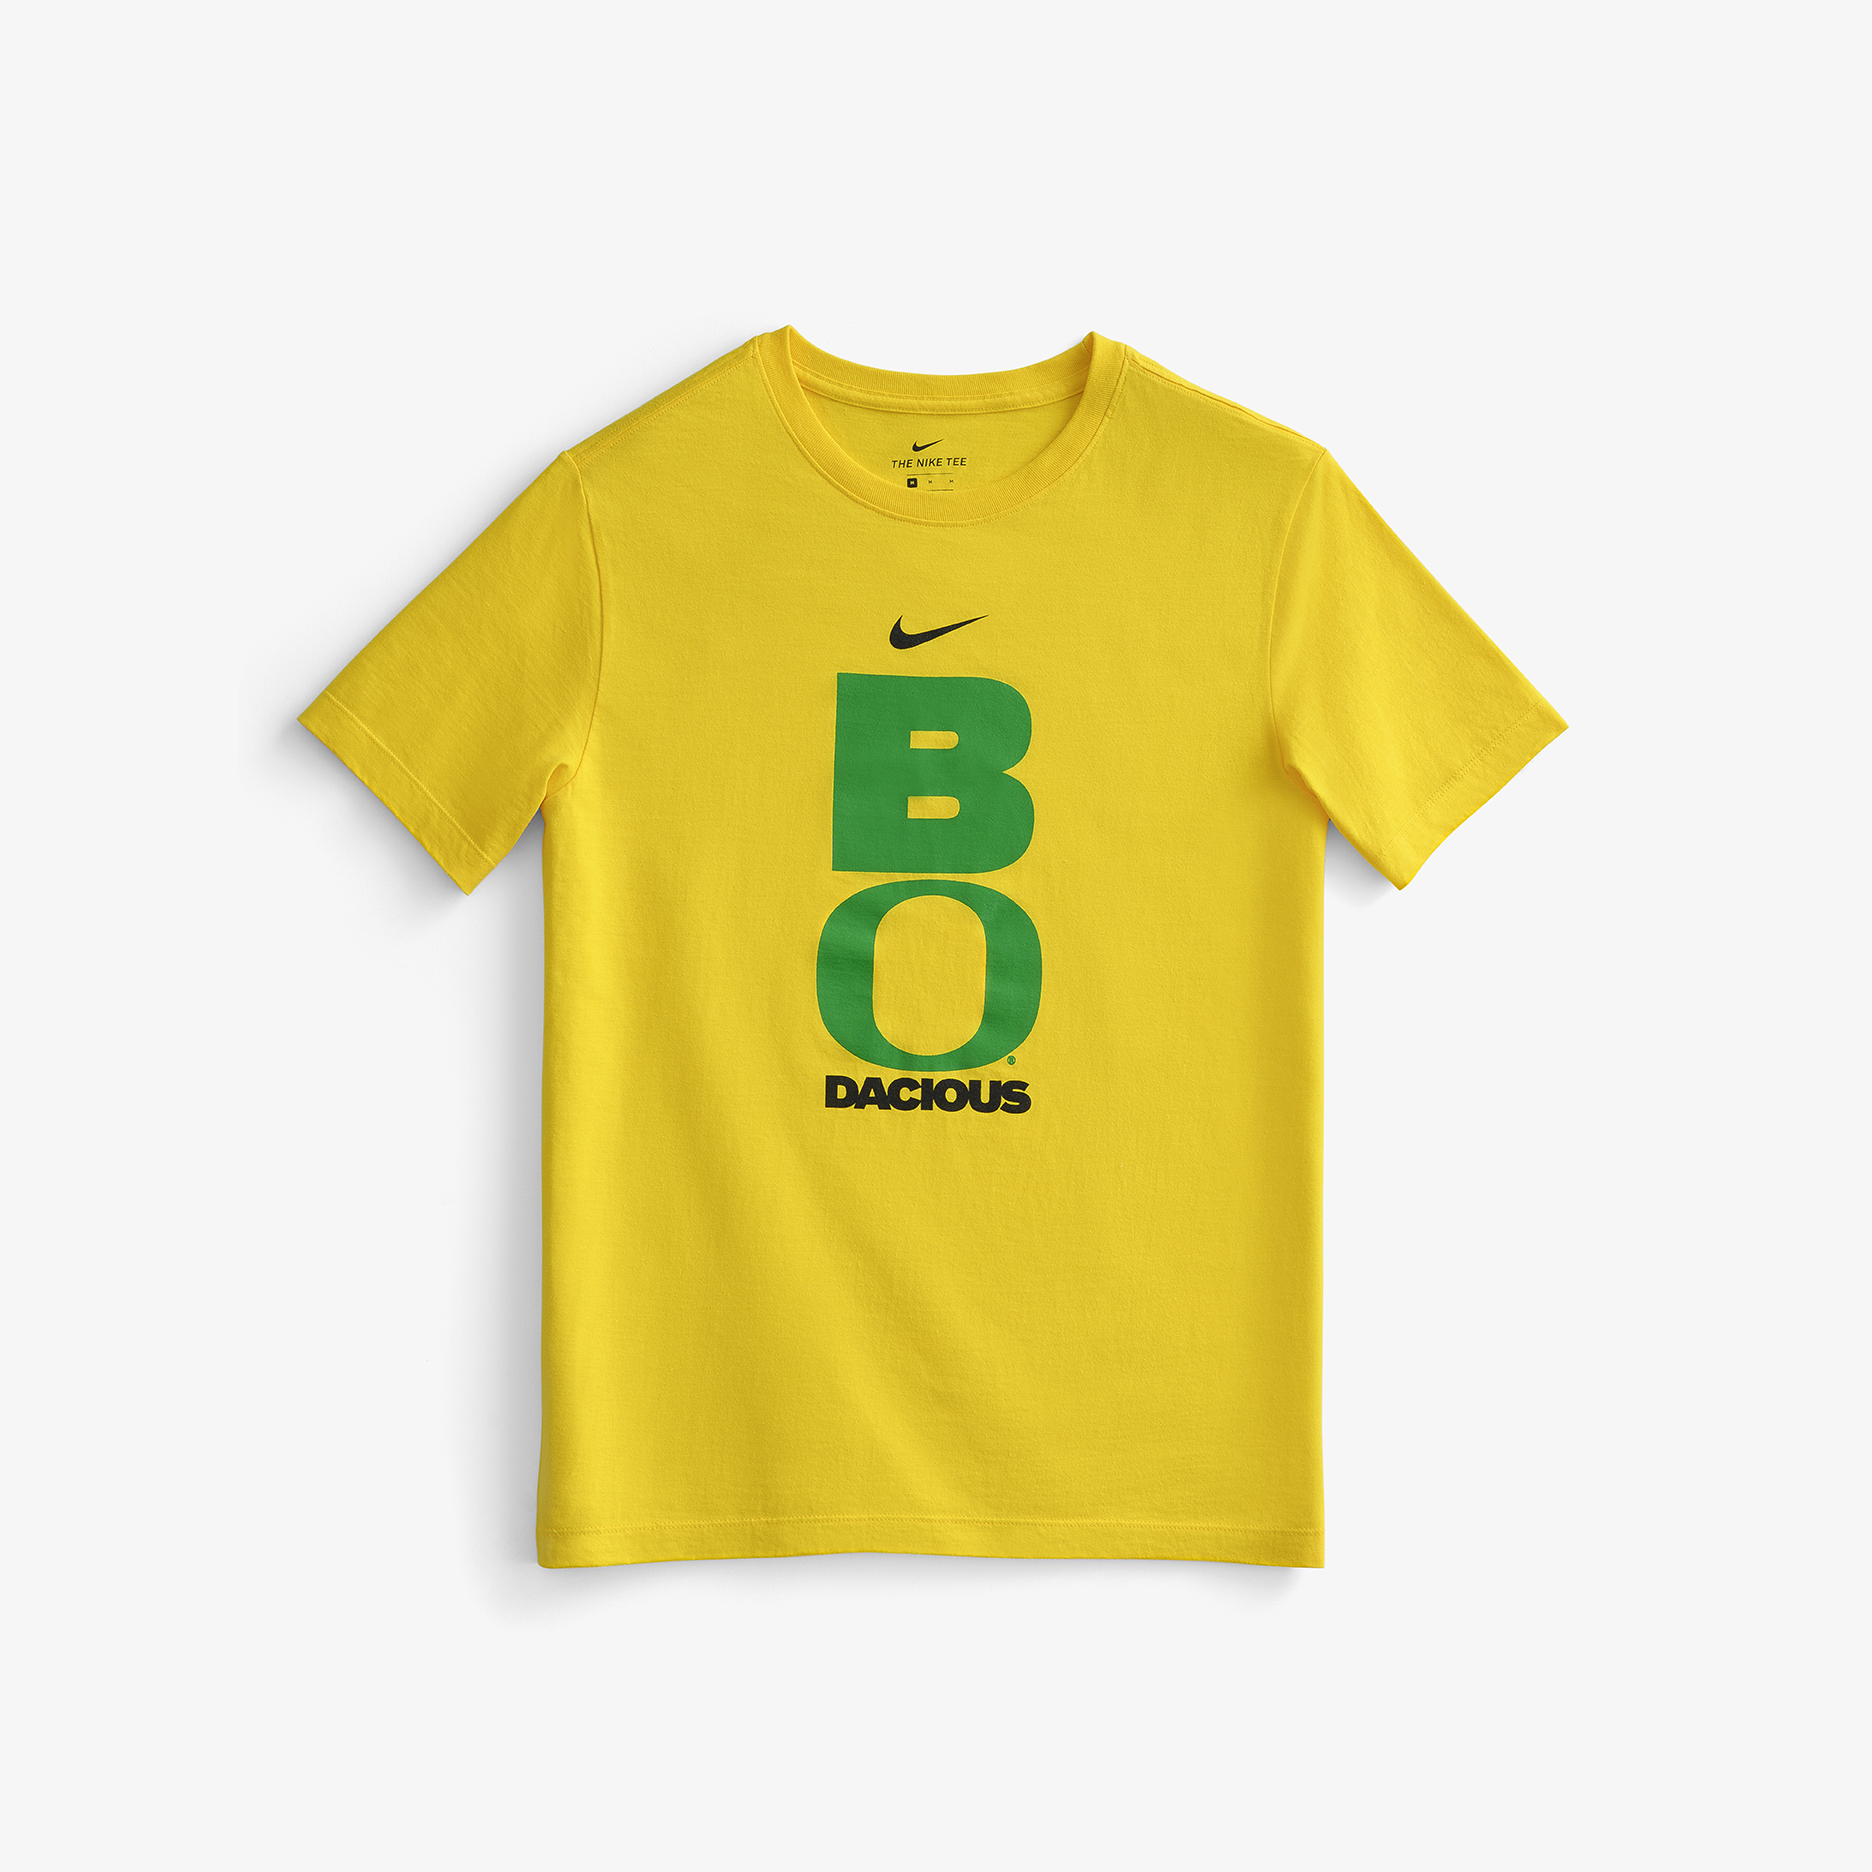 BoDacious T-shirt